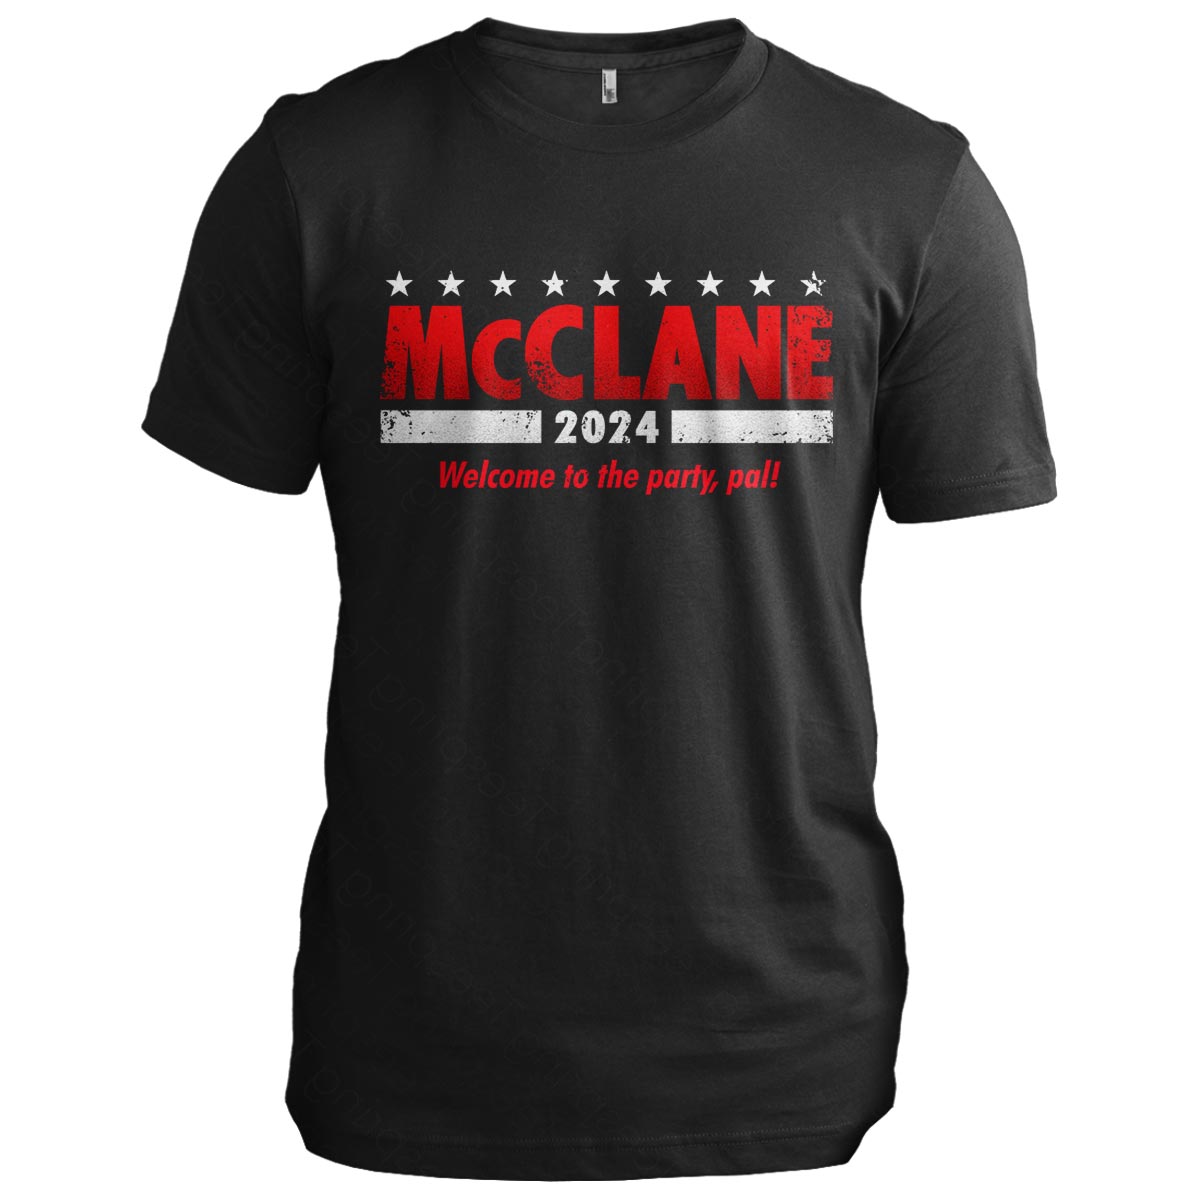 McClane 2024